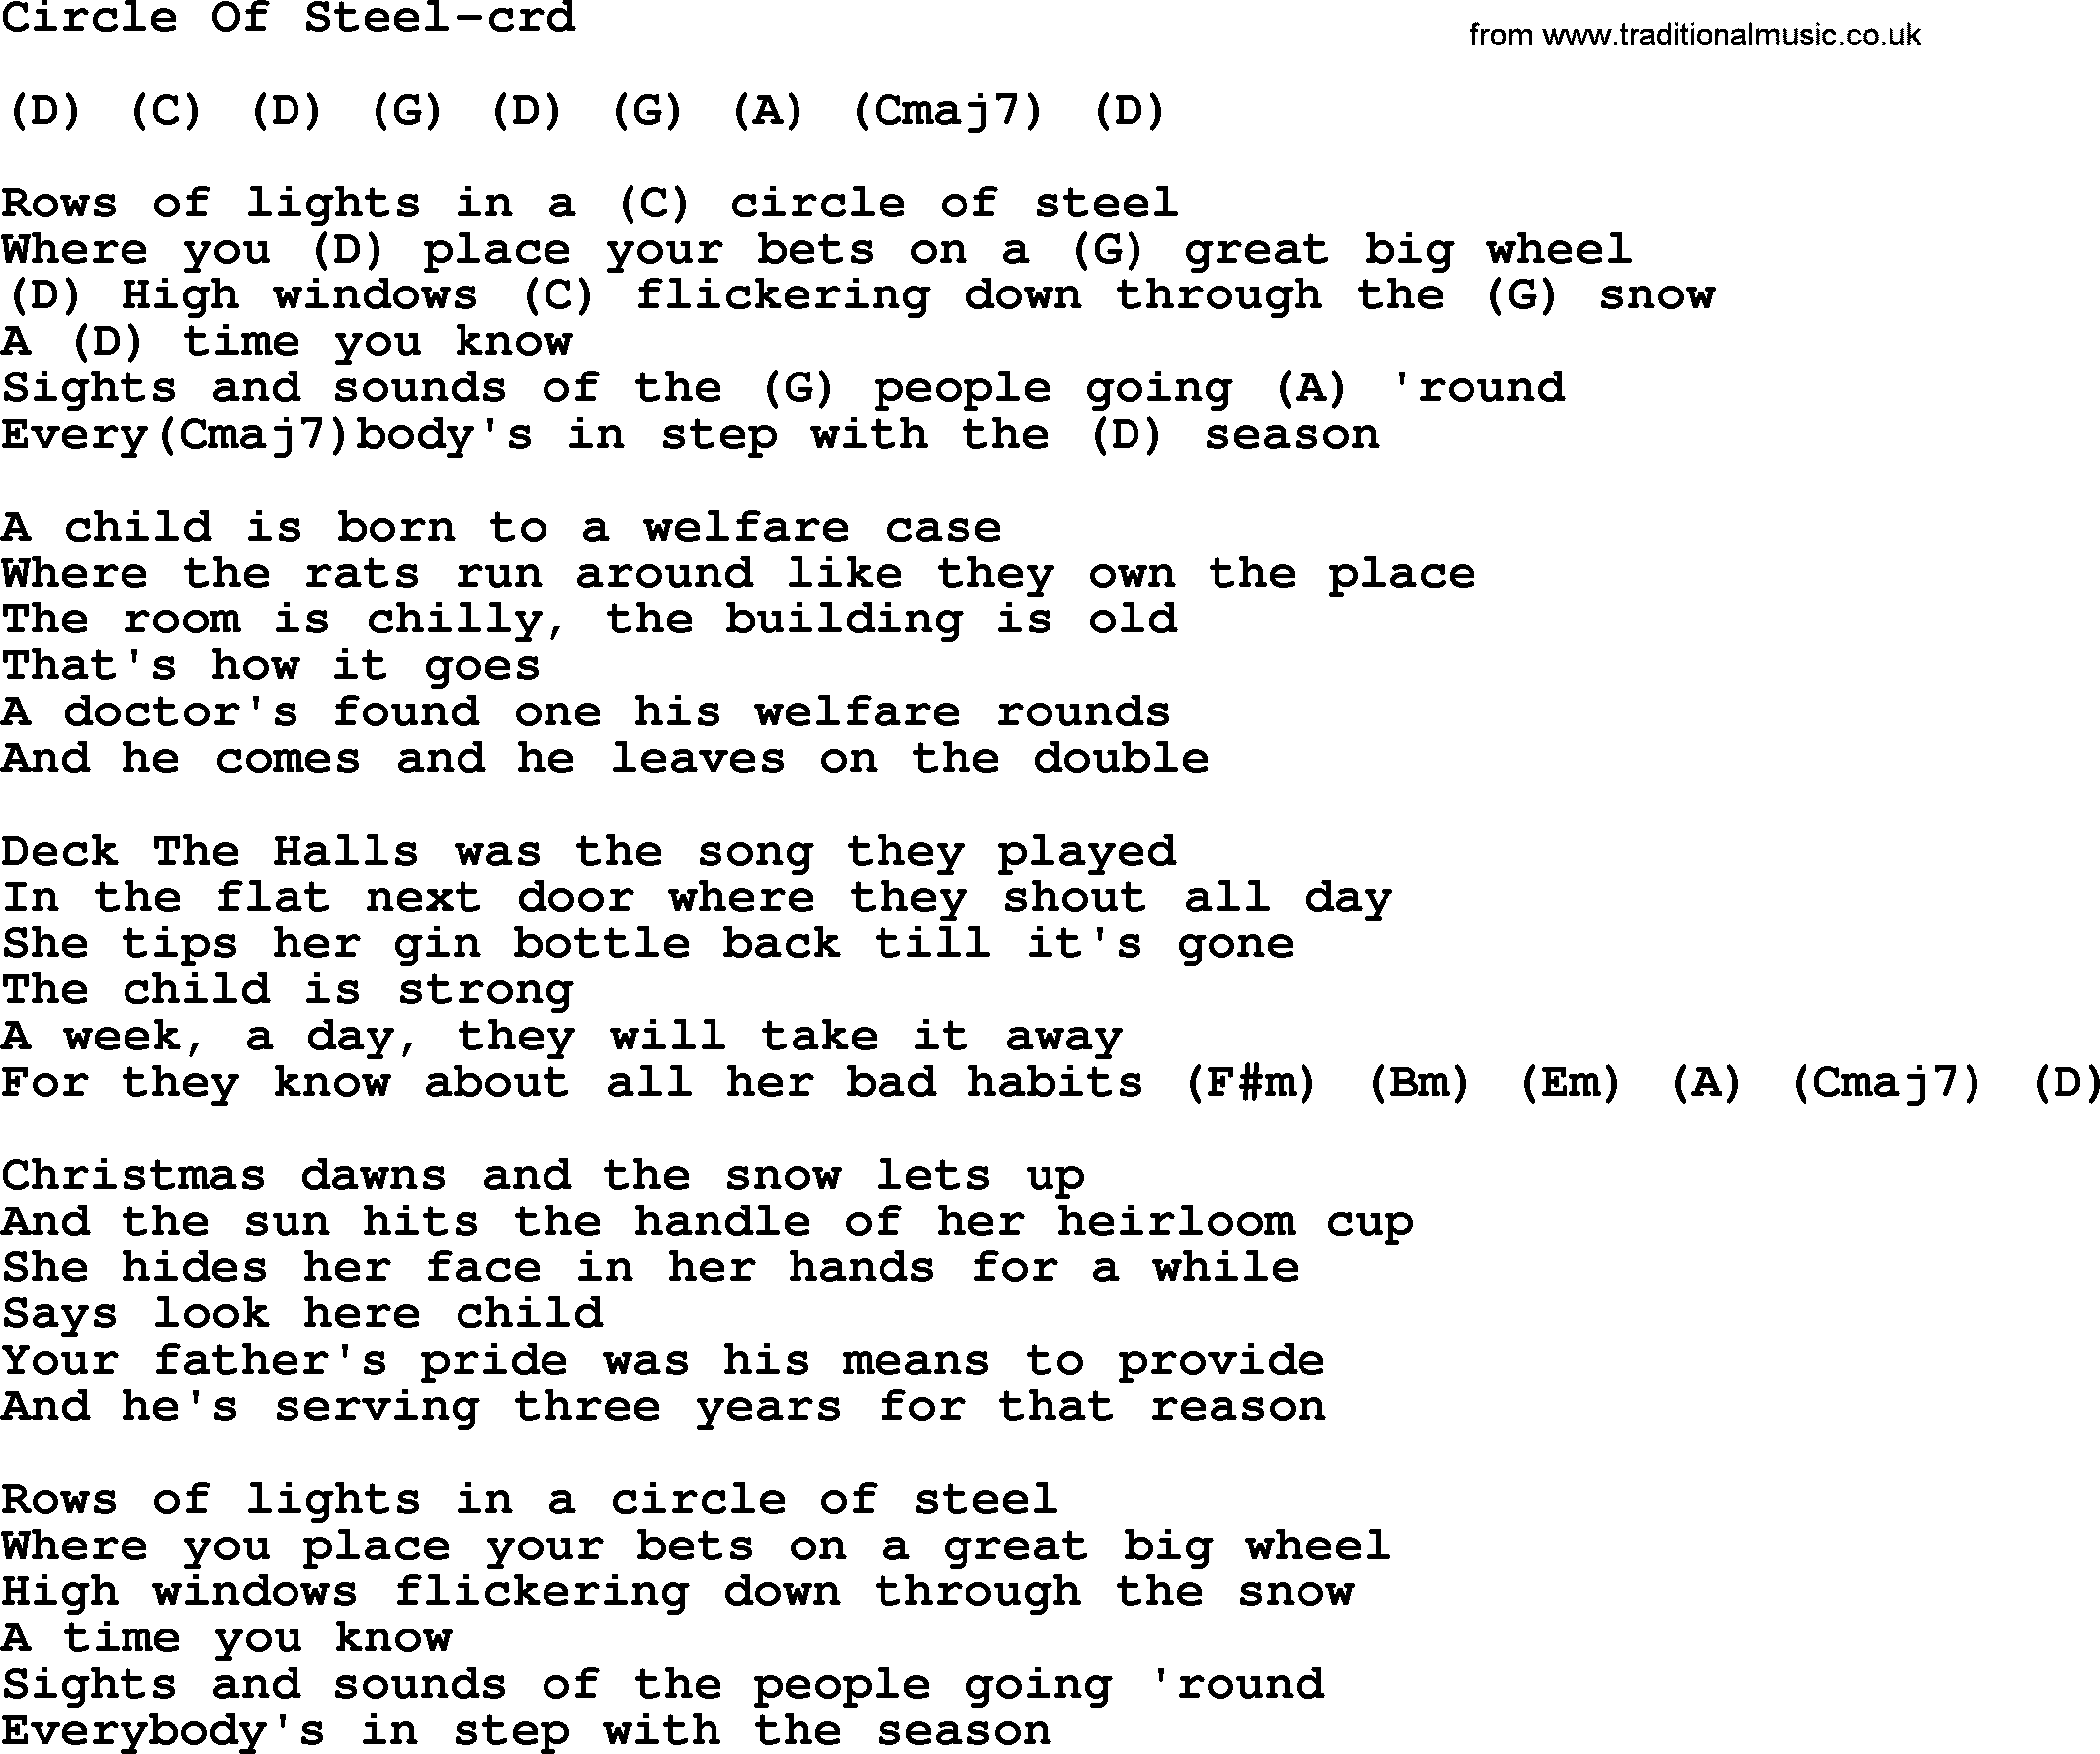 Gordon Lightfoot song Circle Of Steel, lyrics and chords